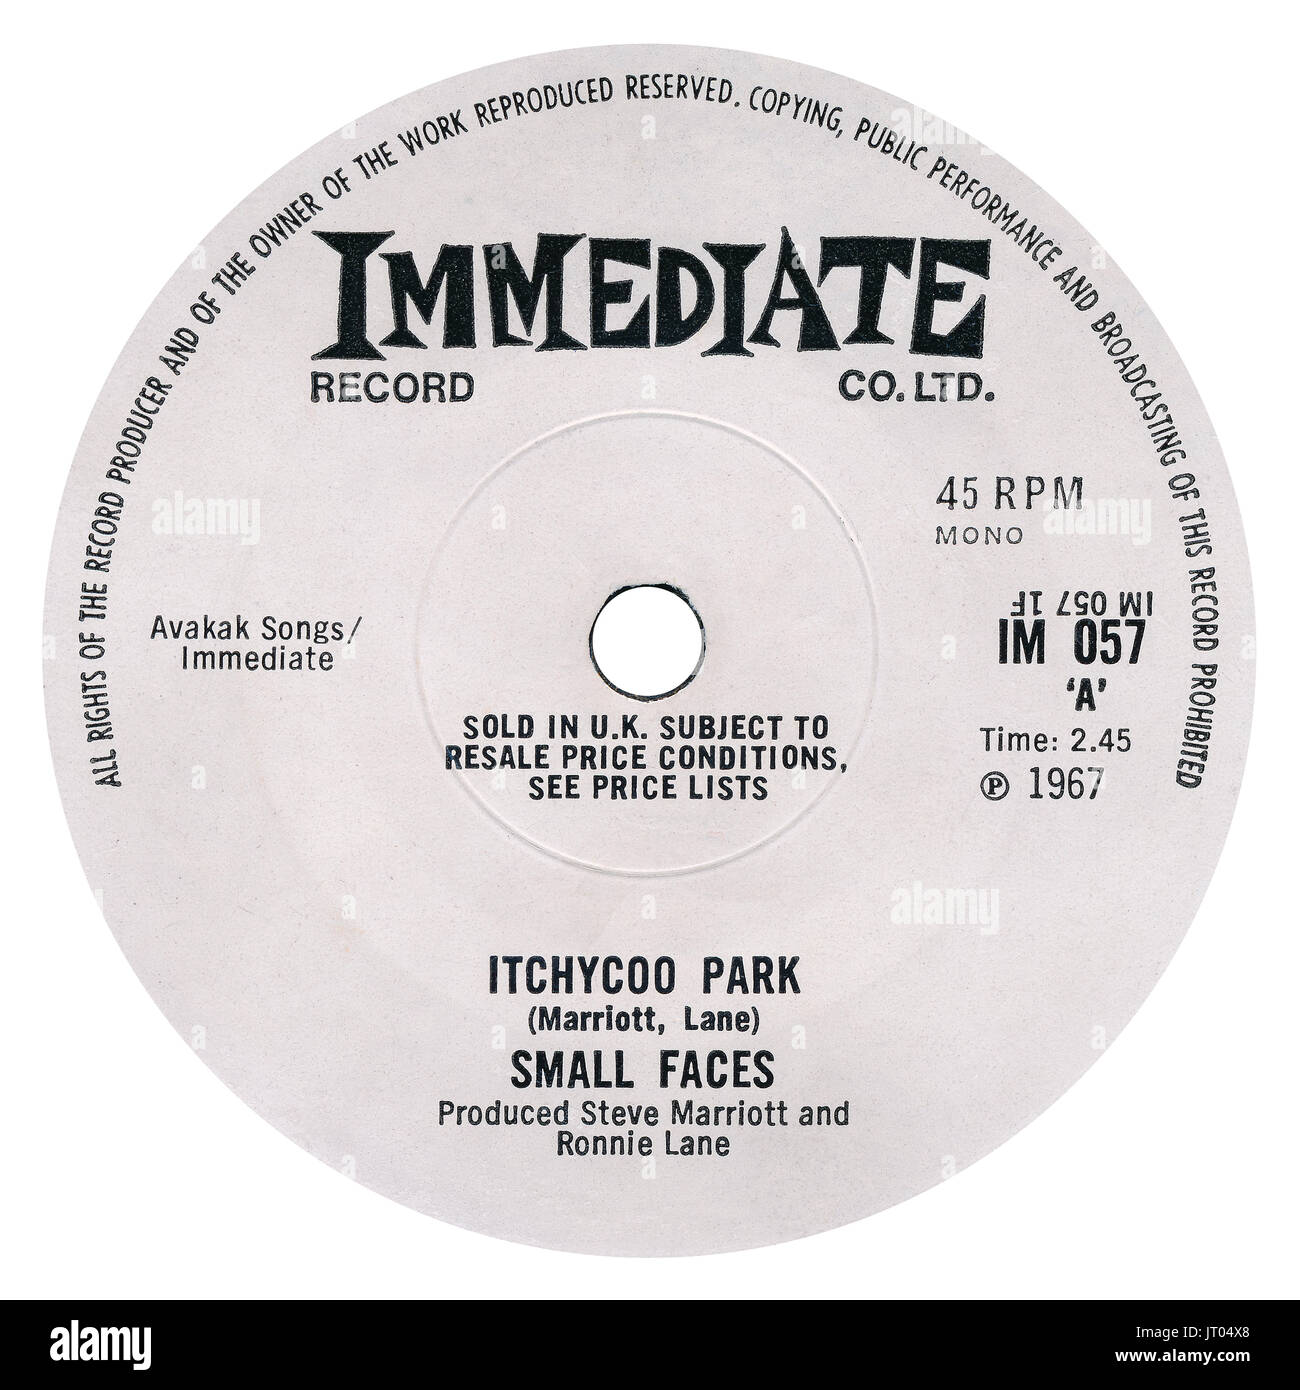 45 RPM 7' UK discográfica de Itchycoo Park por Small Faces inmediata en la etiqueta desde 1967. Foto de stock